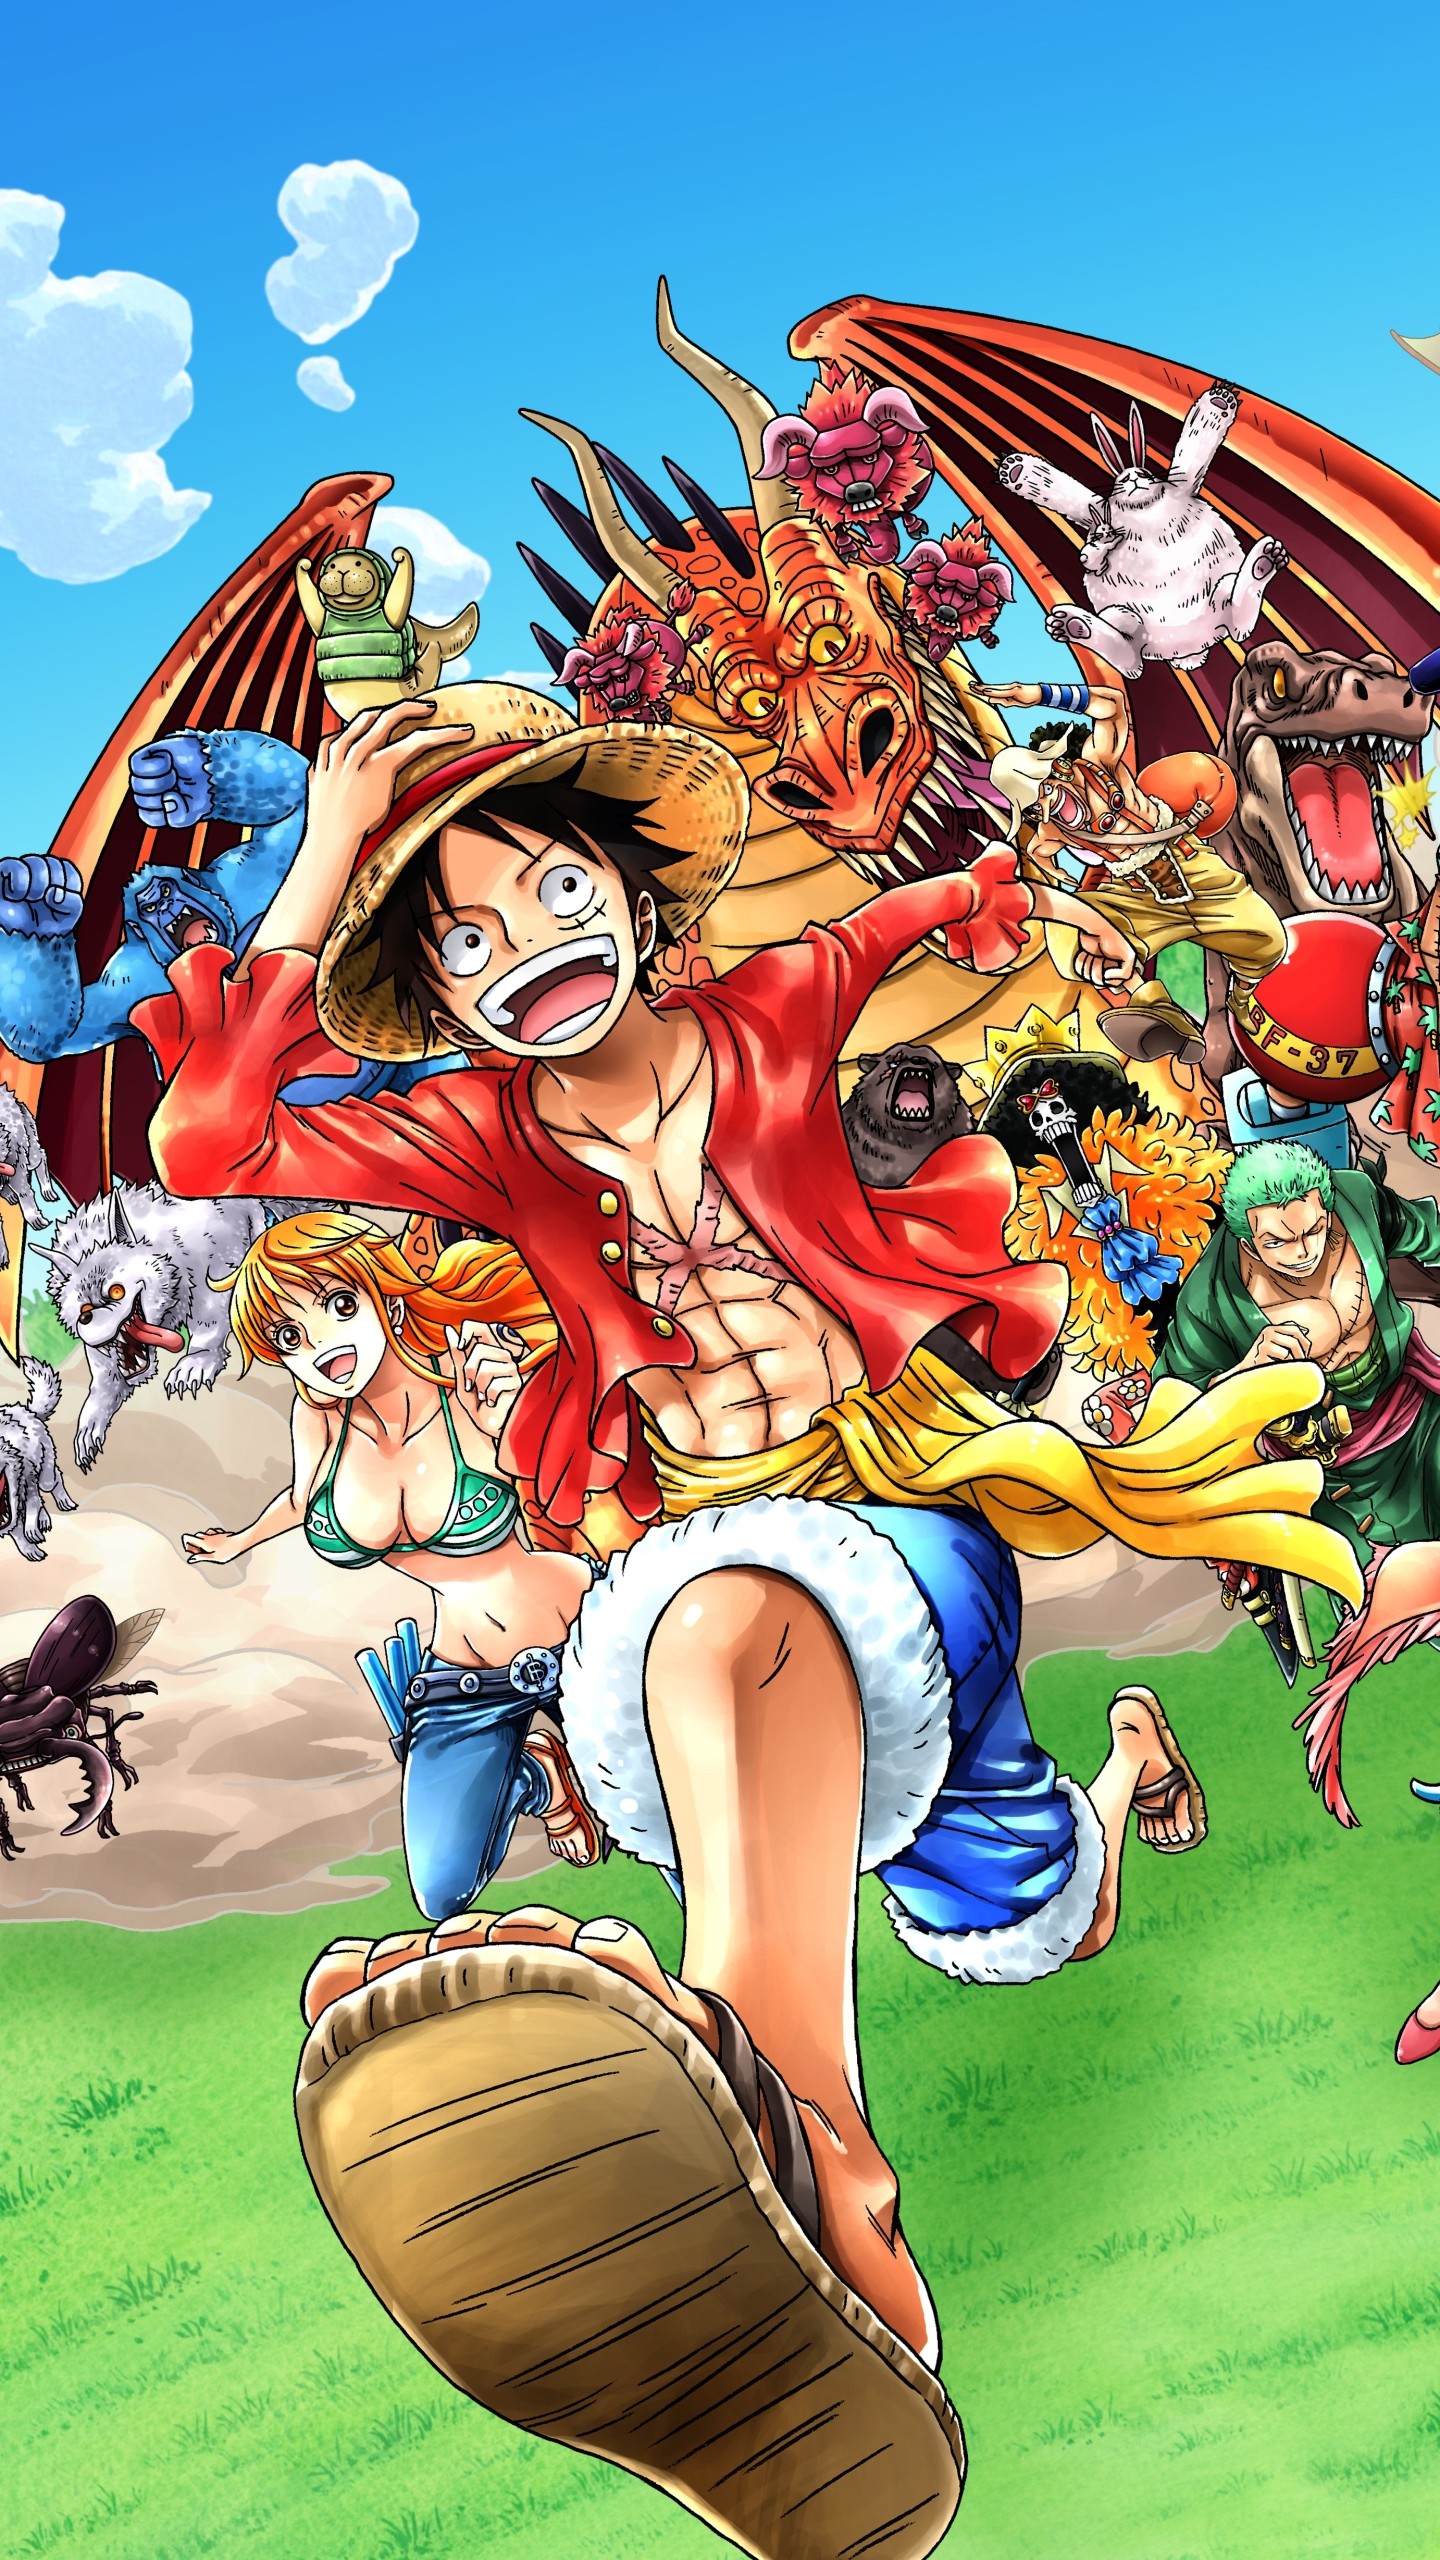 Hình Nền One Piece 4k Đẹp Nhất  1001 Ảnh One Piece 3d